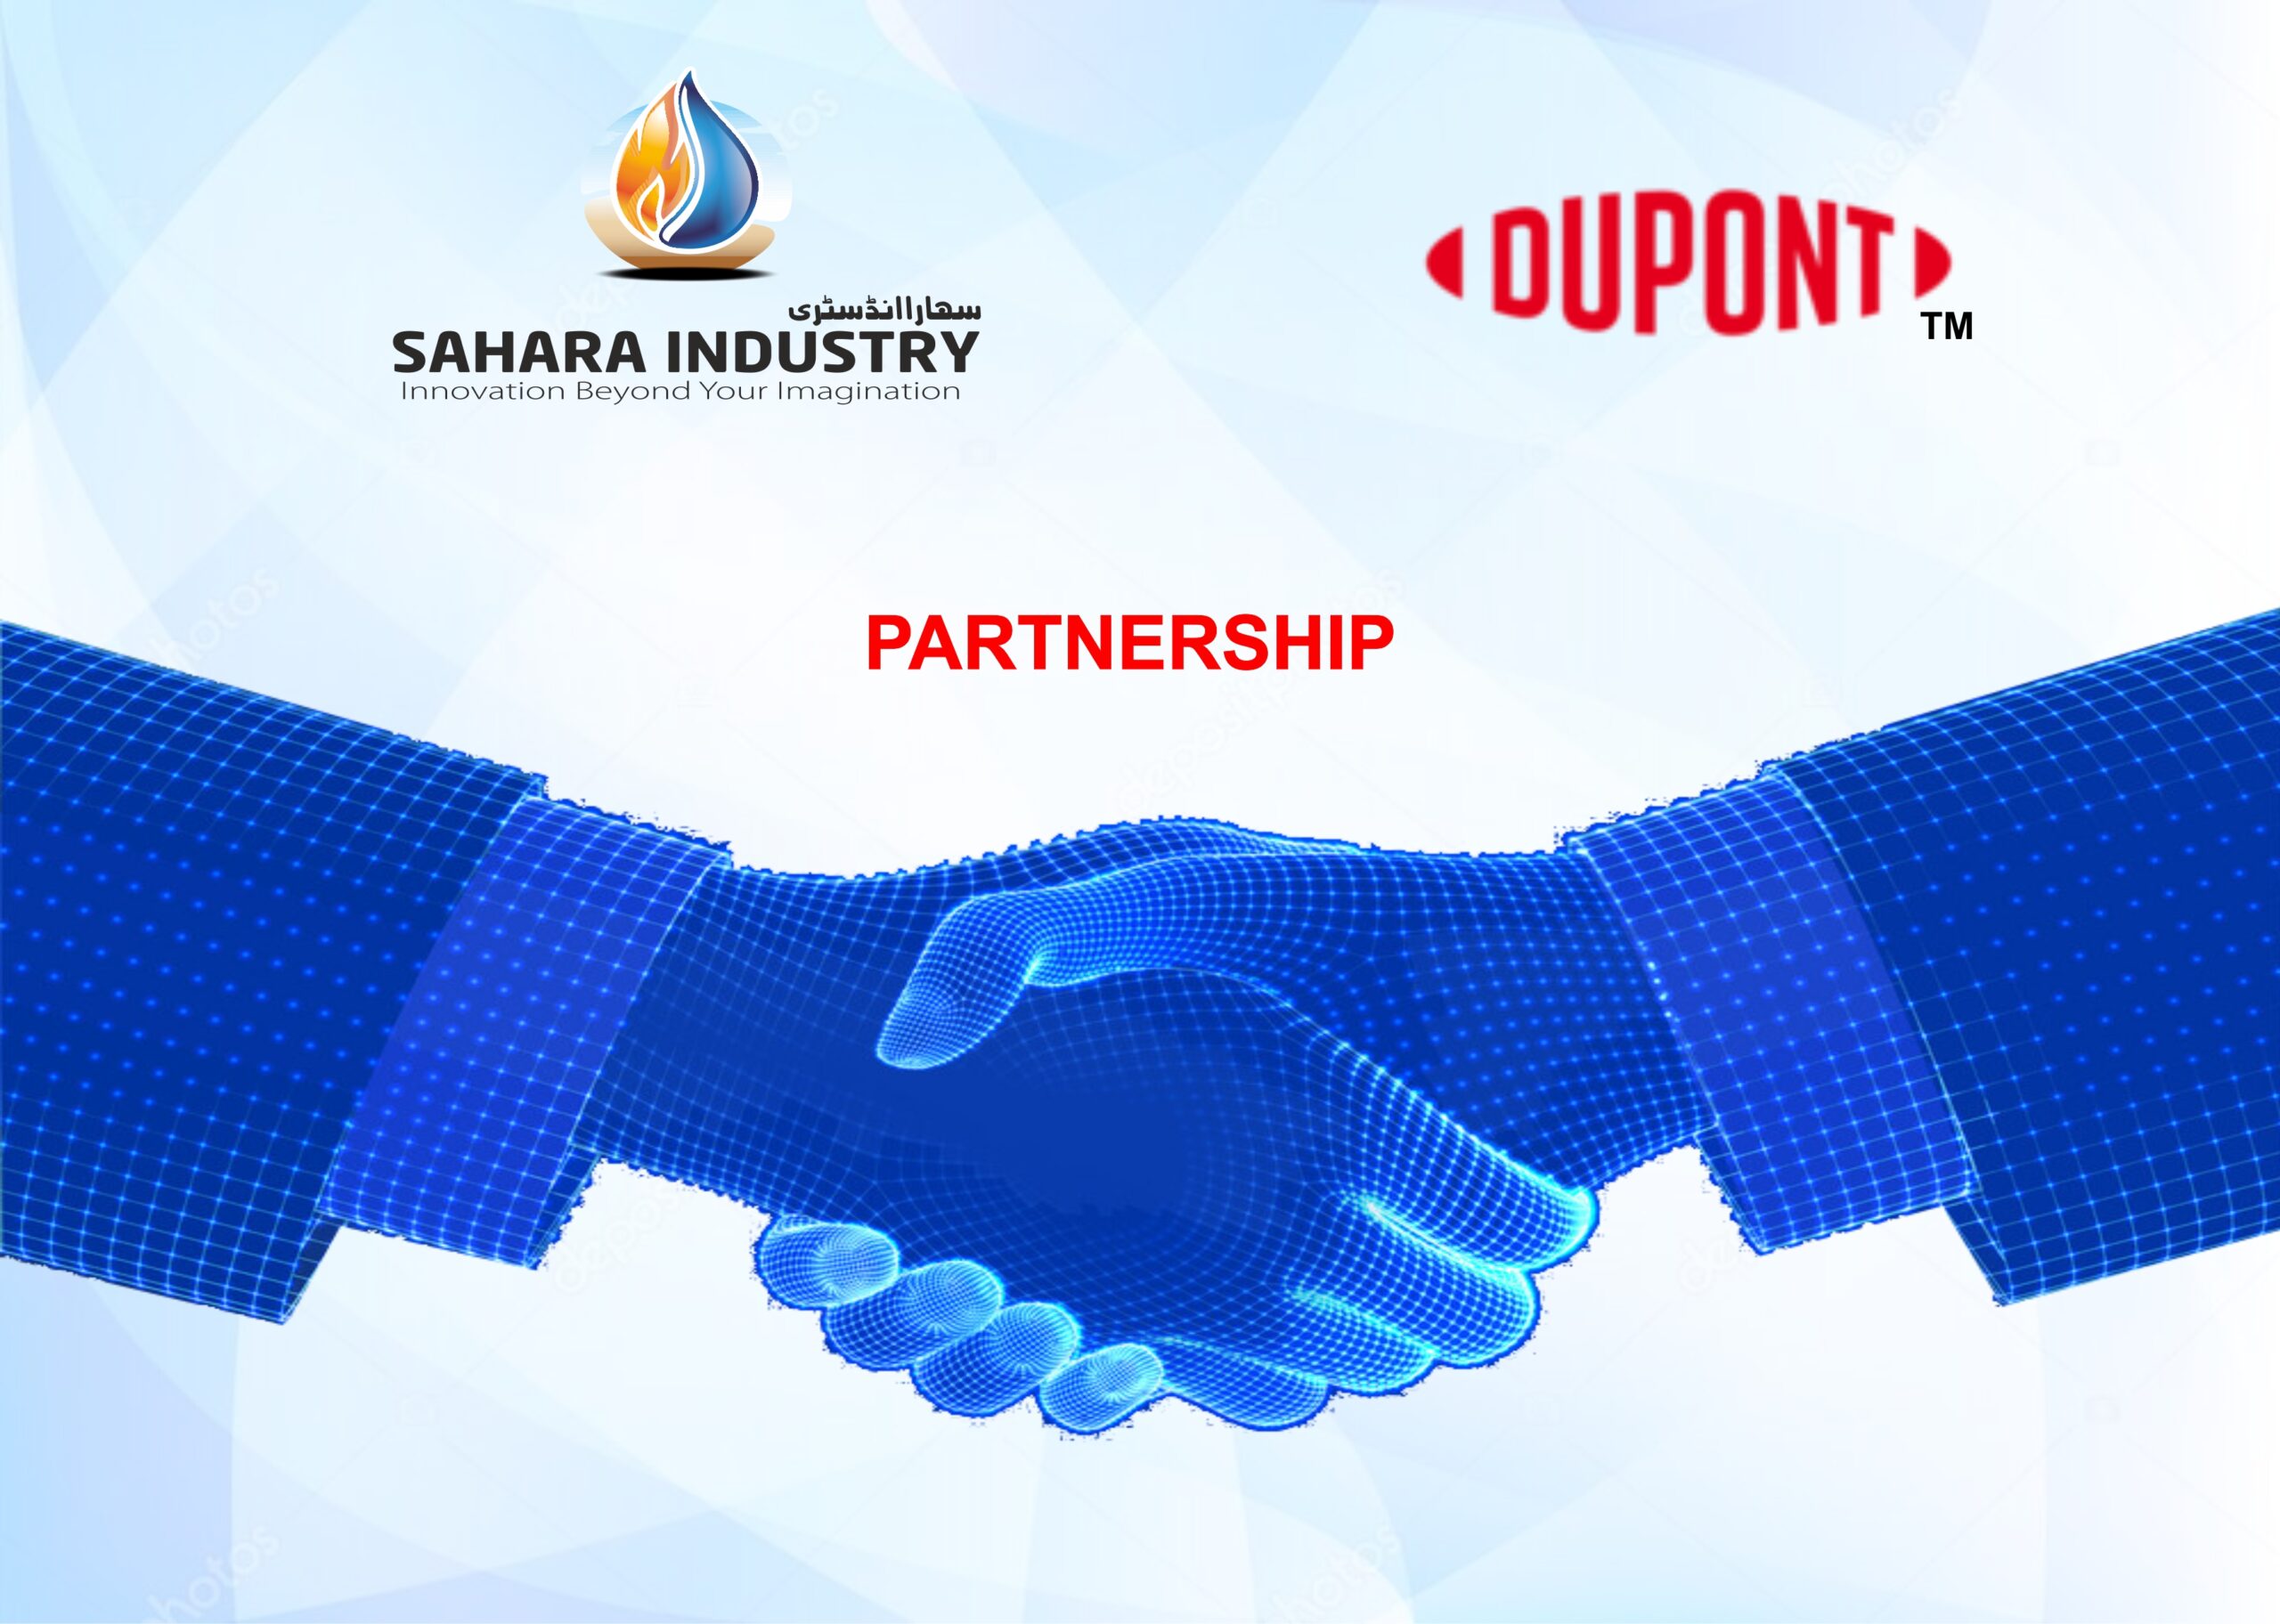 DuPont Sahara Partnership